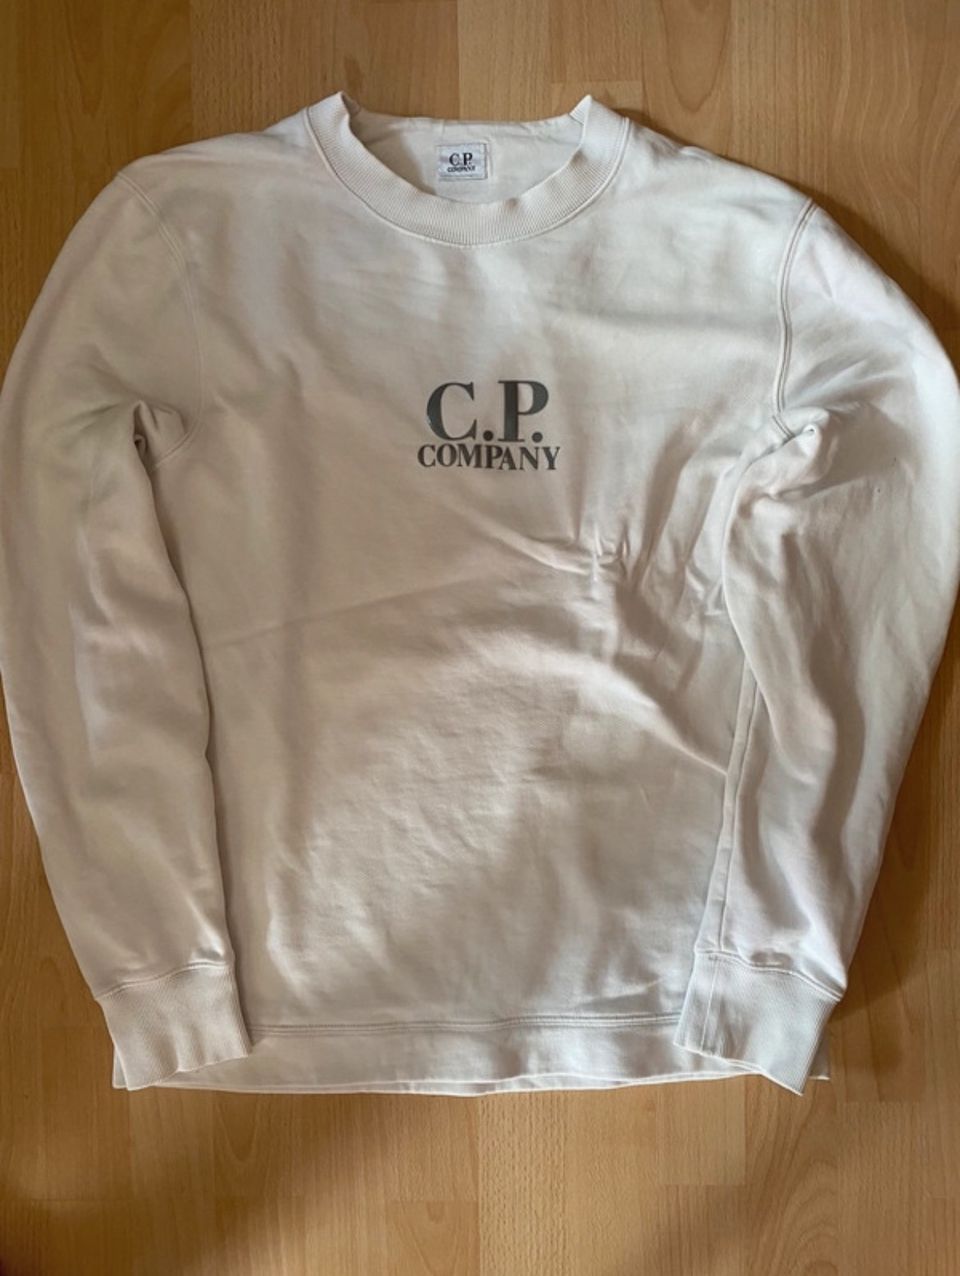 C.P Company